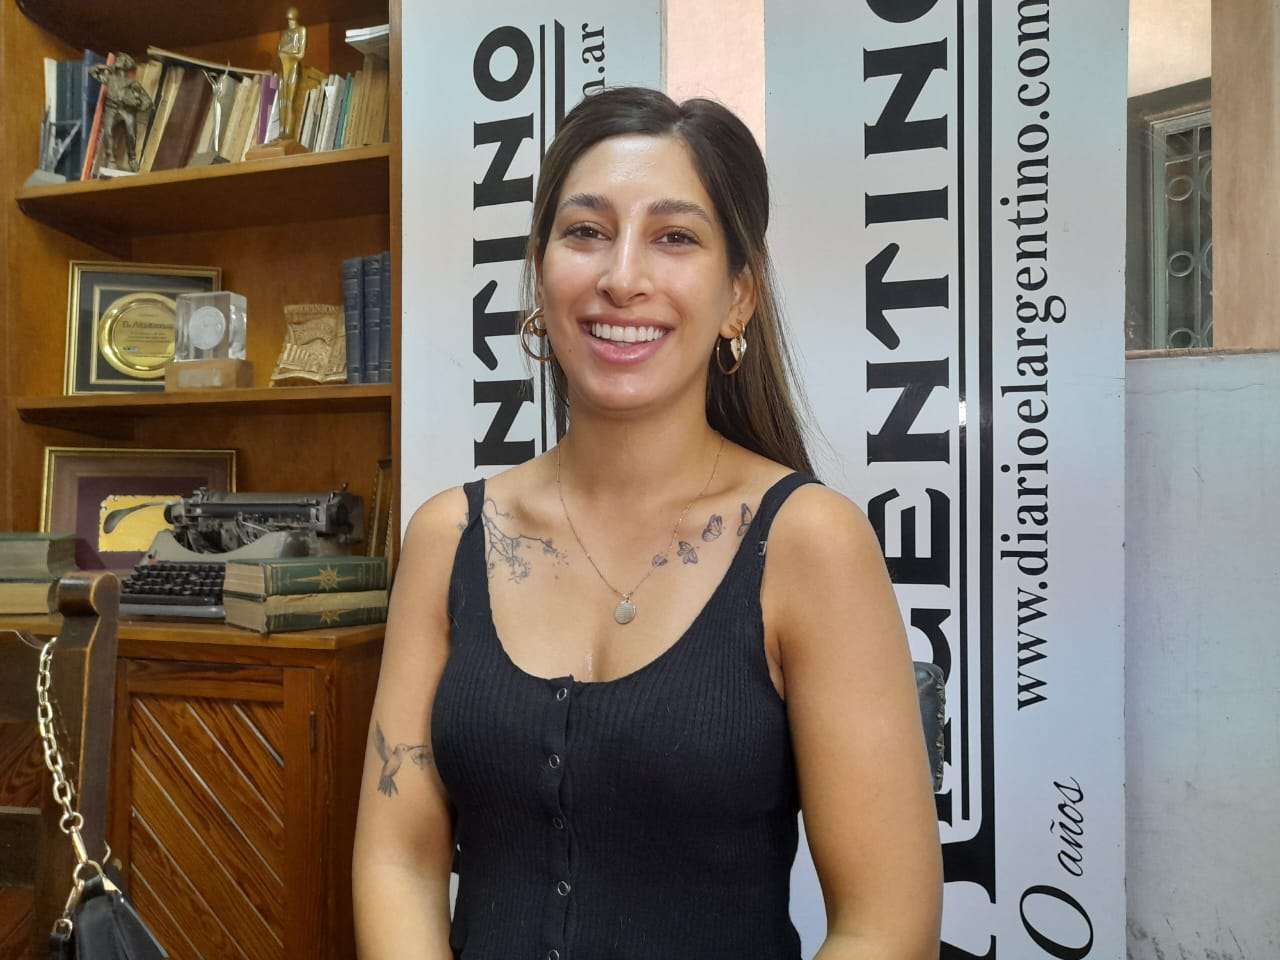 Tatuajes de guerra: Una gualeguaychuense realiza aureolas gratis para ex pacientes oncológicas